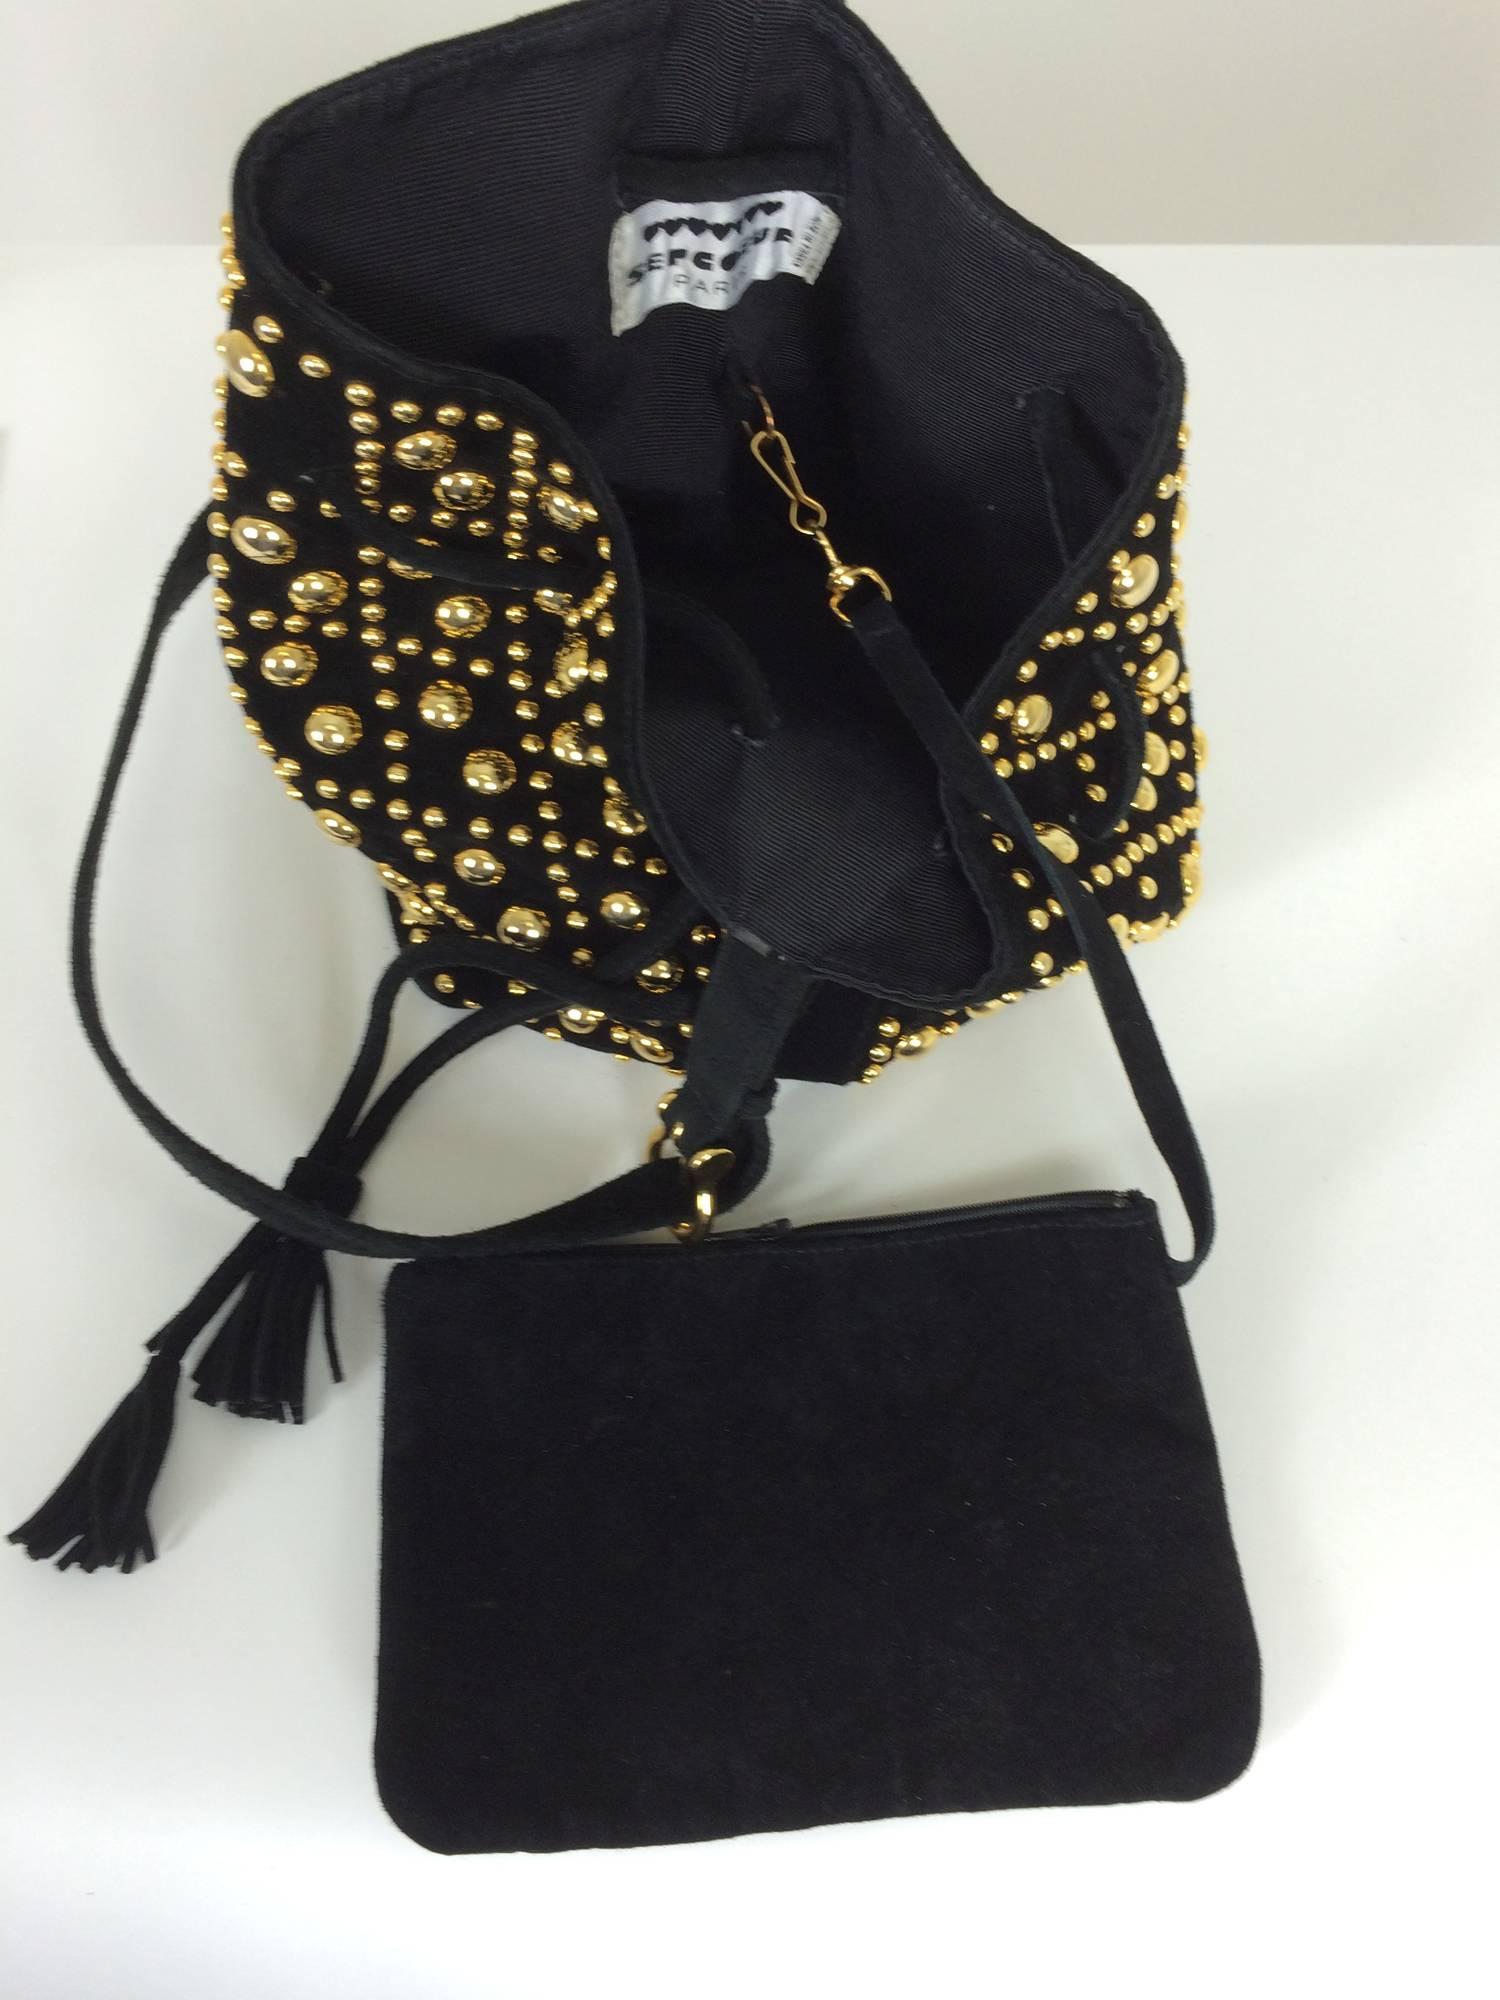 Women's Gold studded black suede shoulder bag Sepcoeur Paris 1980s